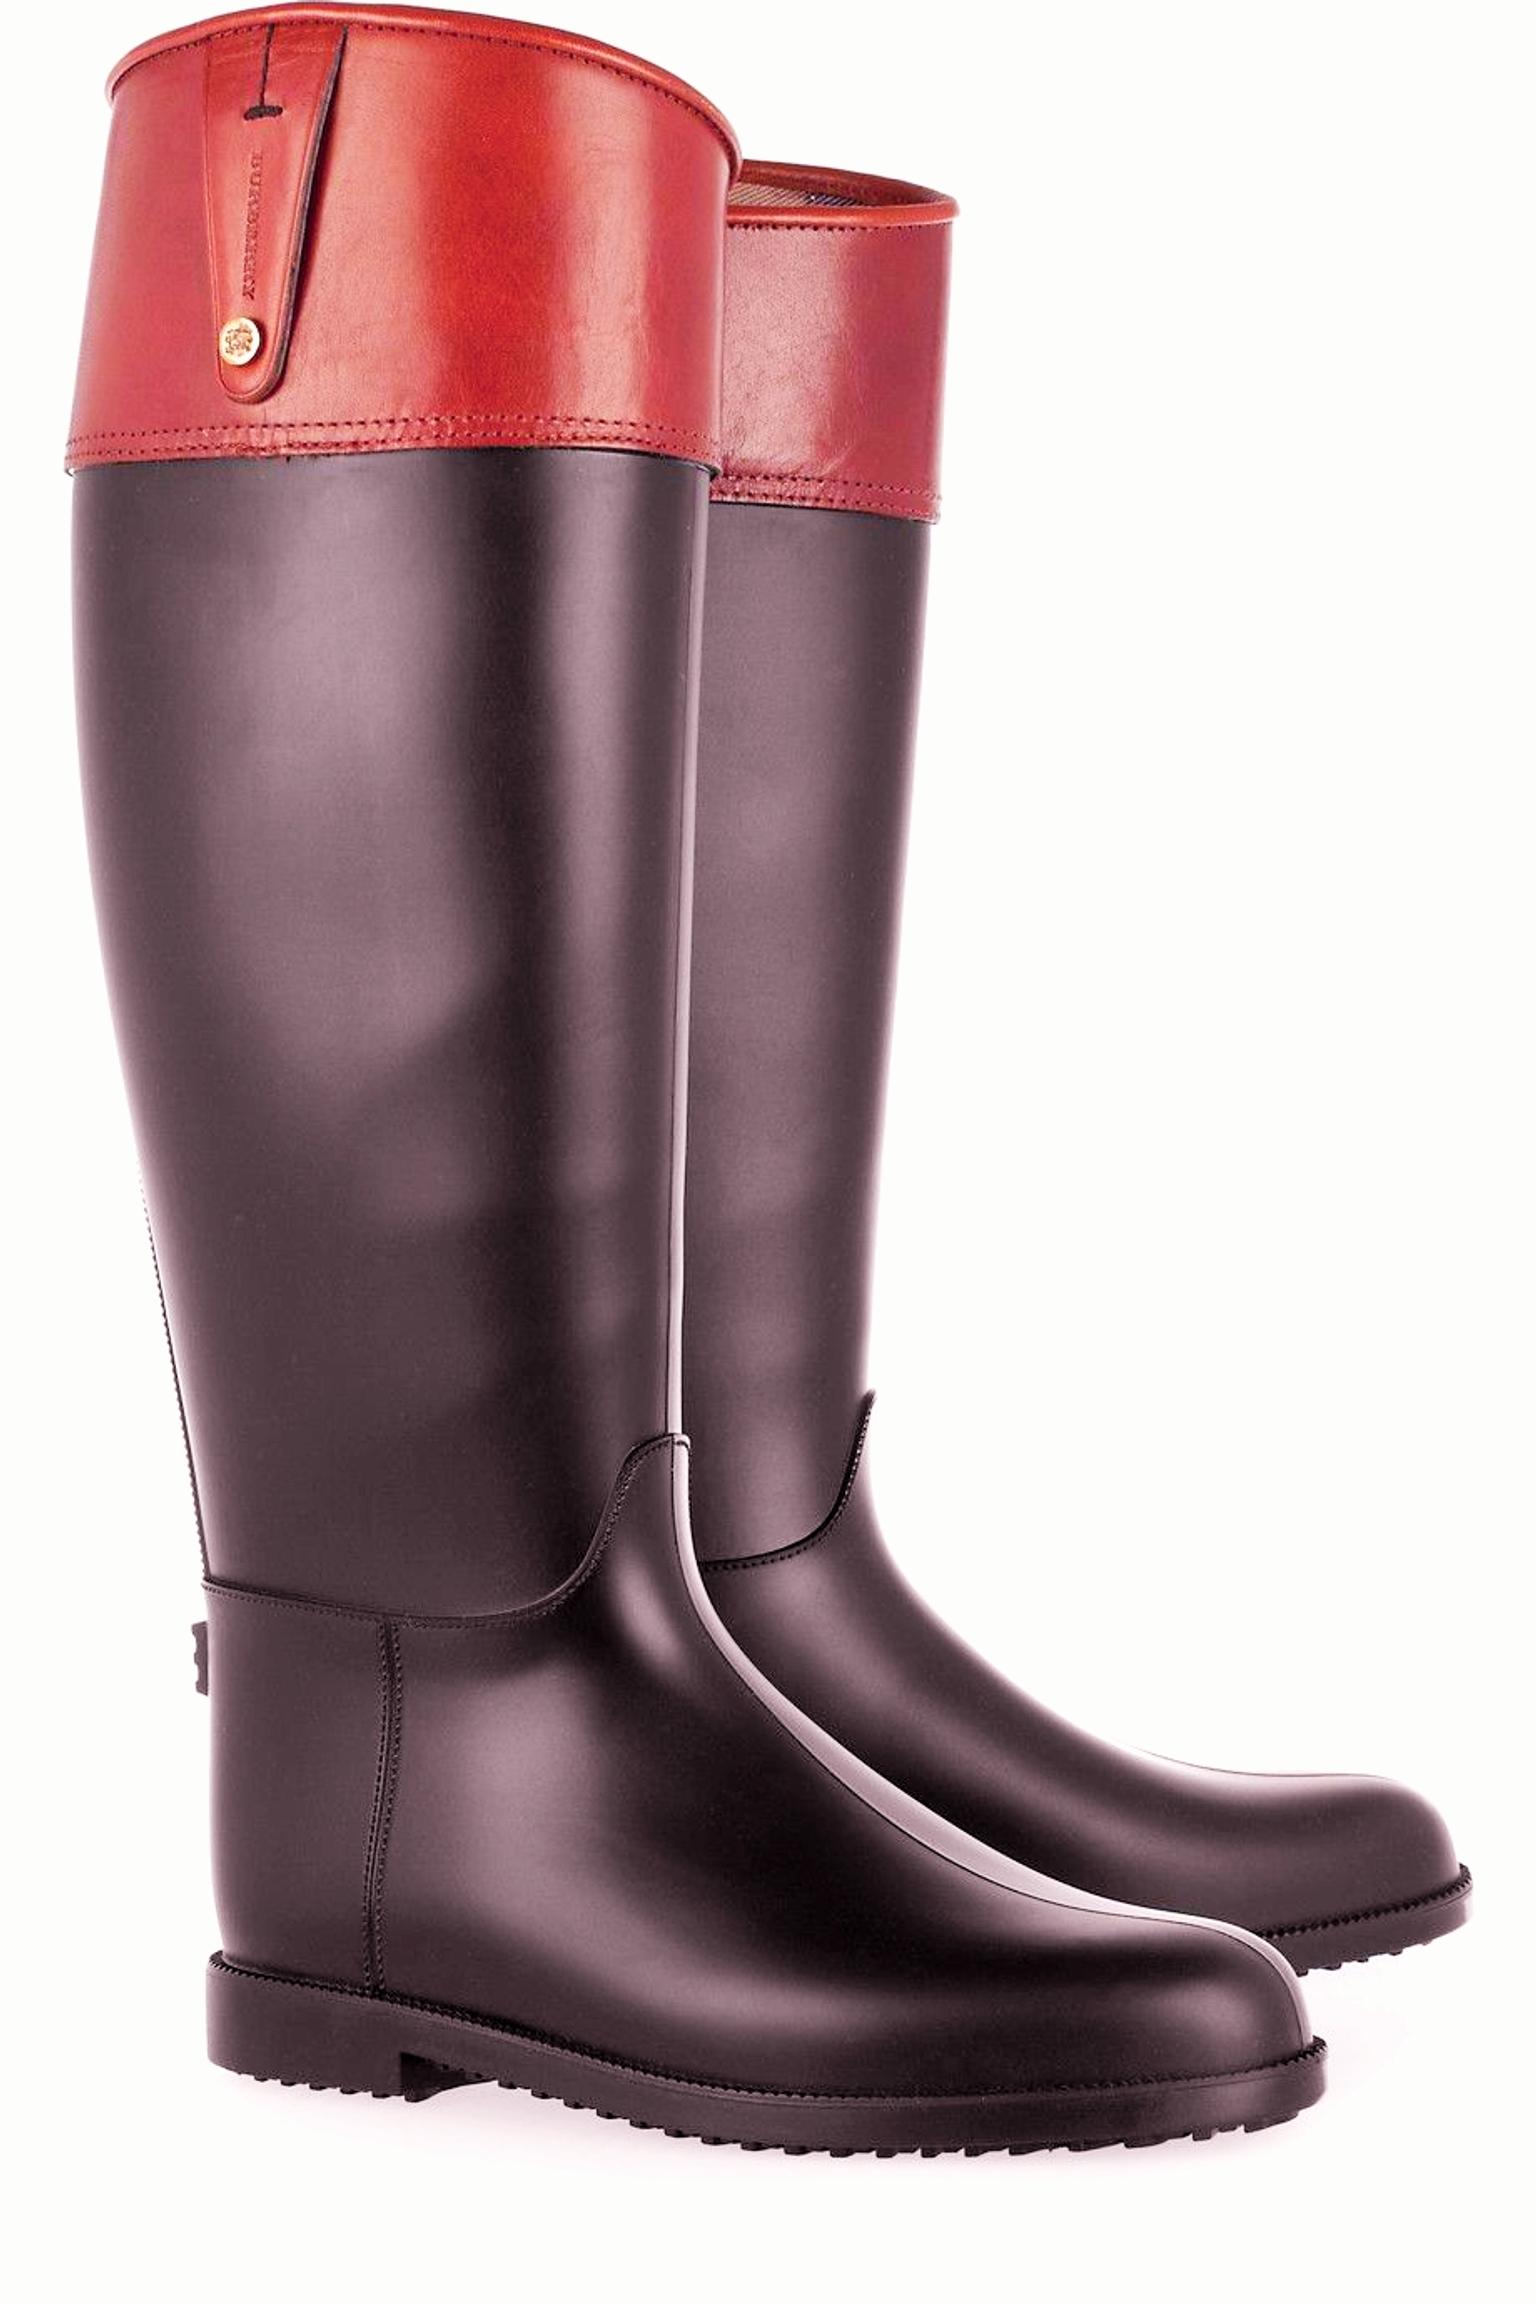 Burberry Rain Boots UK5 Brand New in W7 